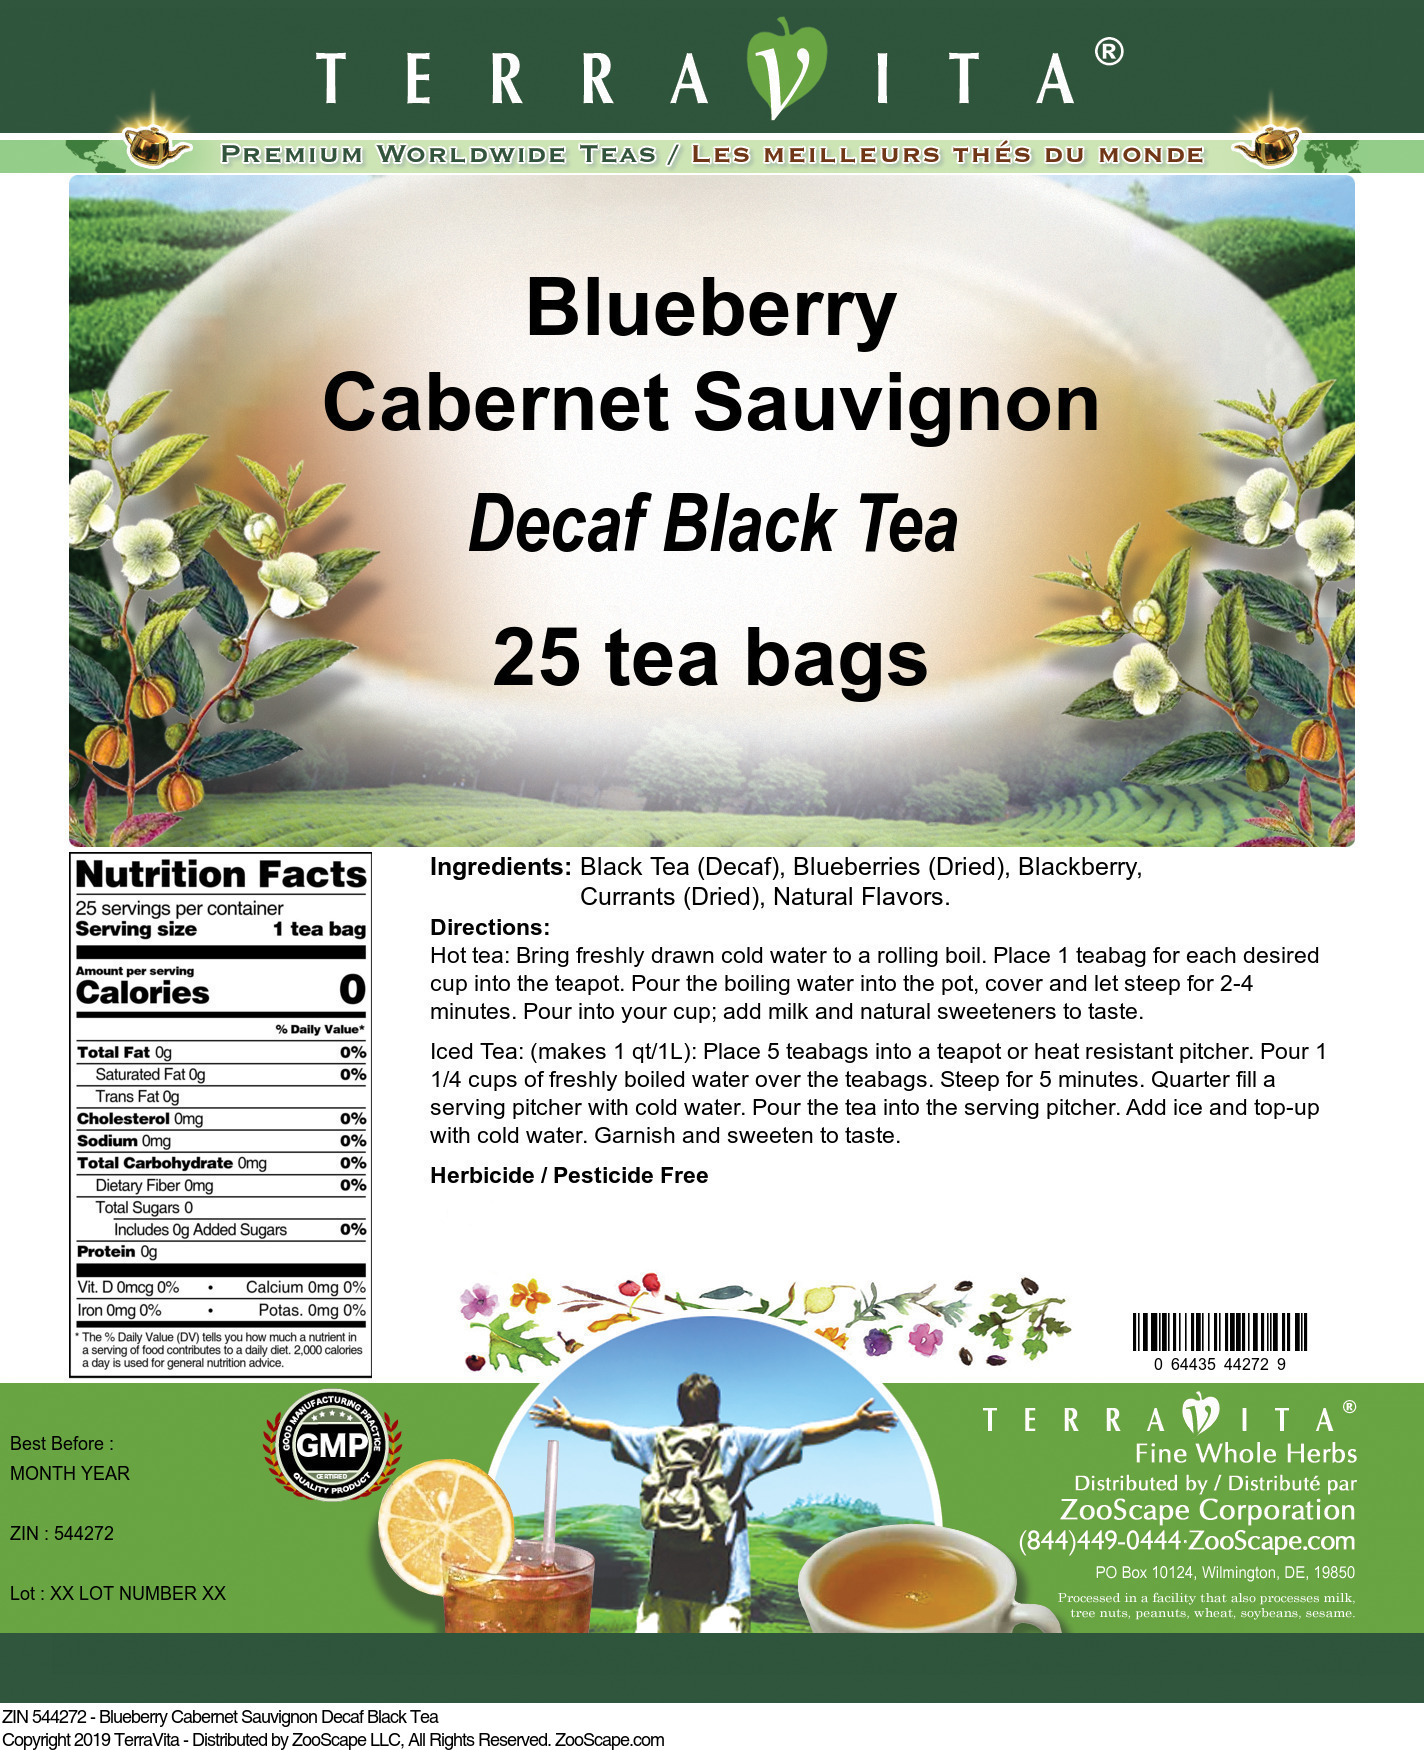 Blueberry Cabernet Sauvignon Decaf Black Tea - Label